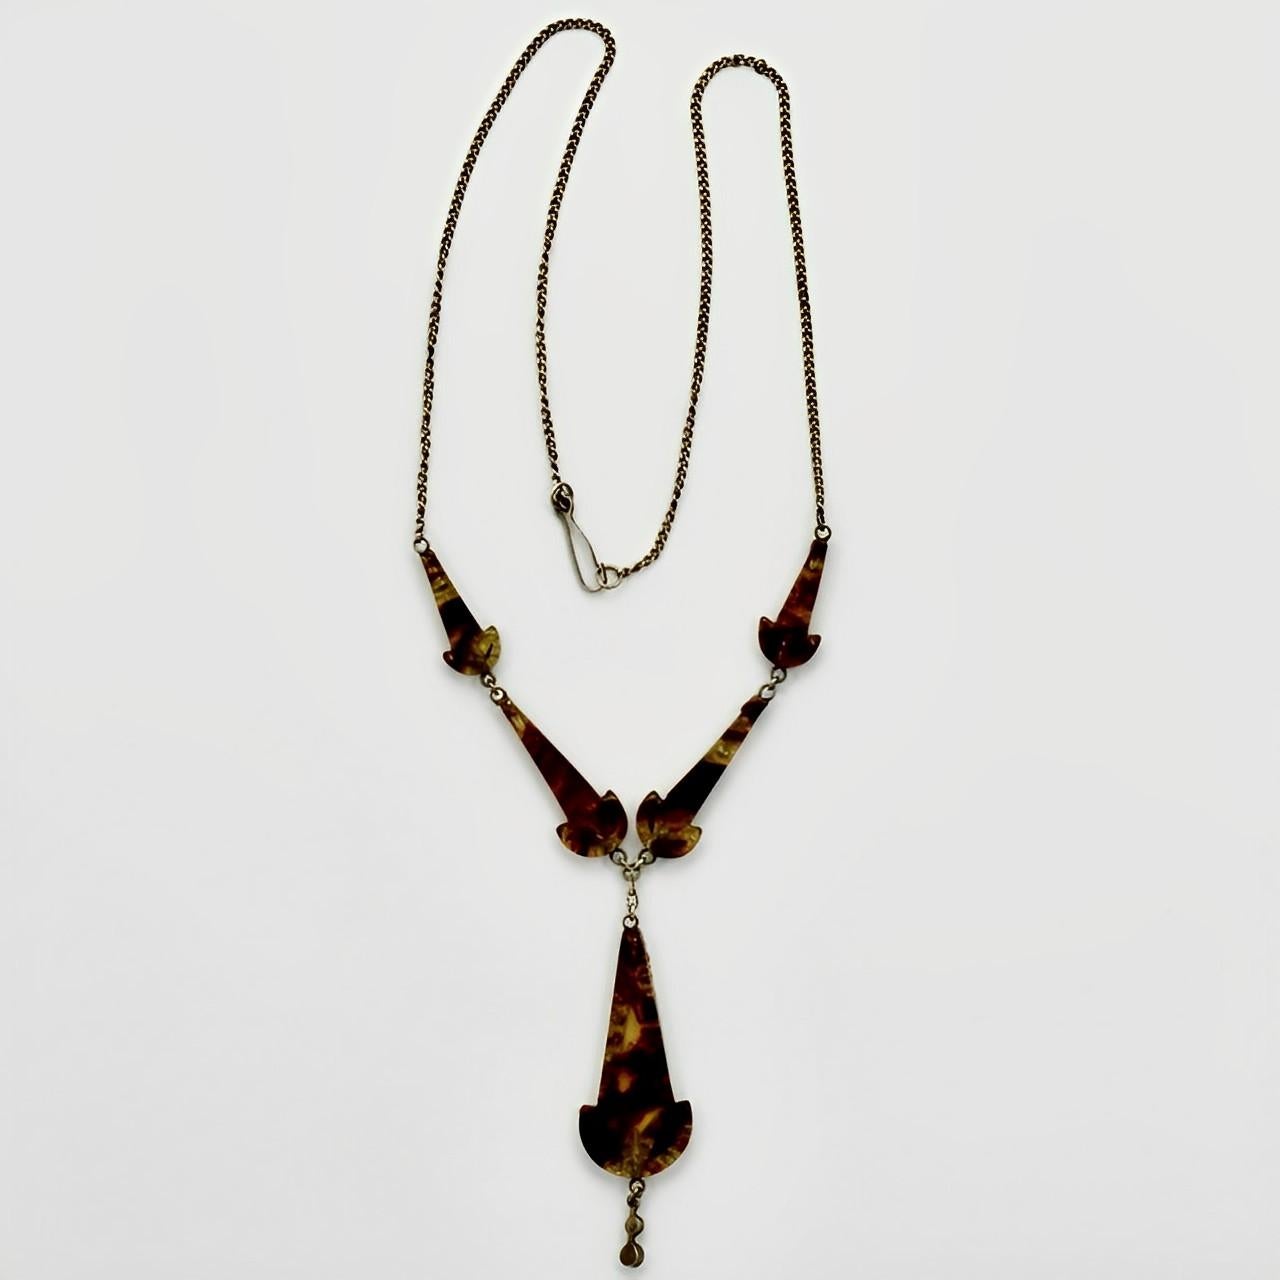 Art Deco Silver Tone Rhinestone Faux Tortoiseshell Necklace with Drop Pendant  For Sale 1